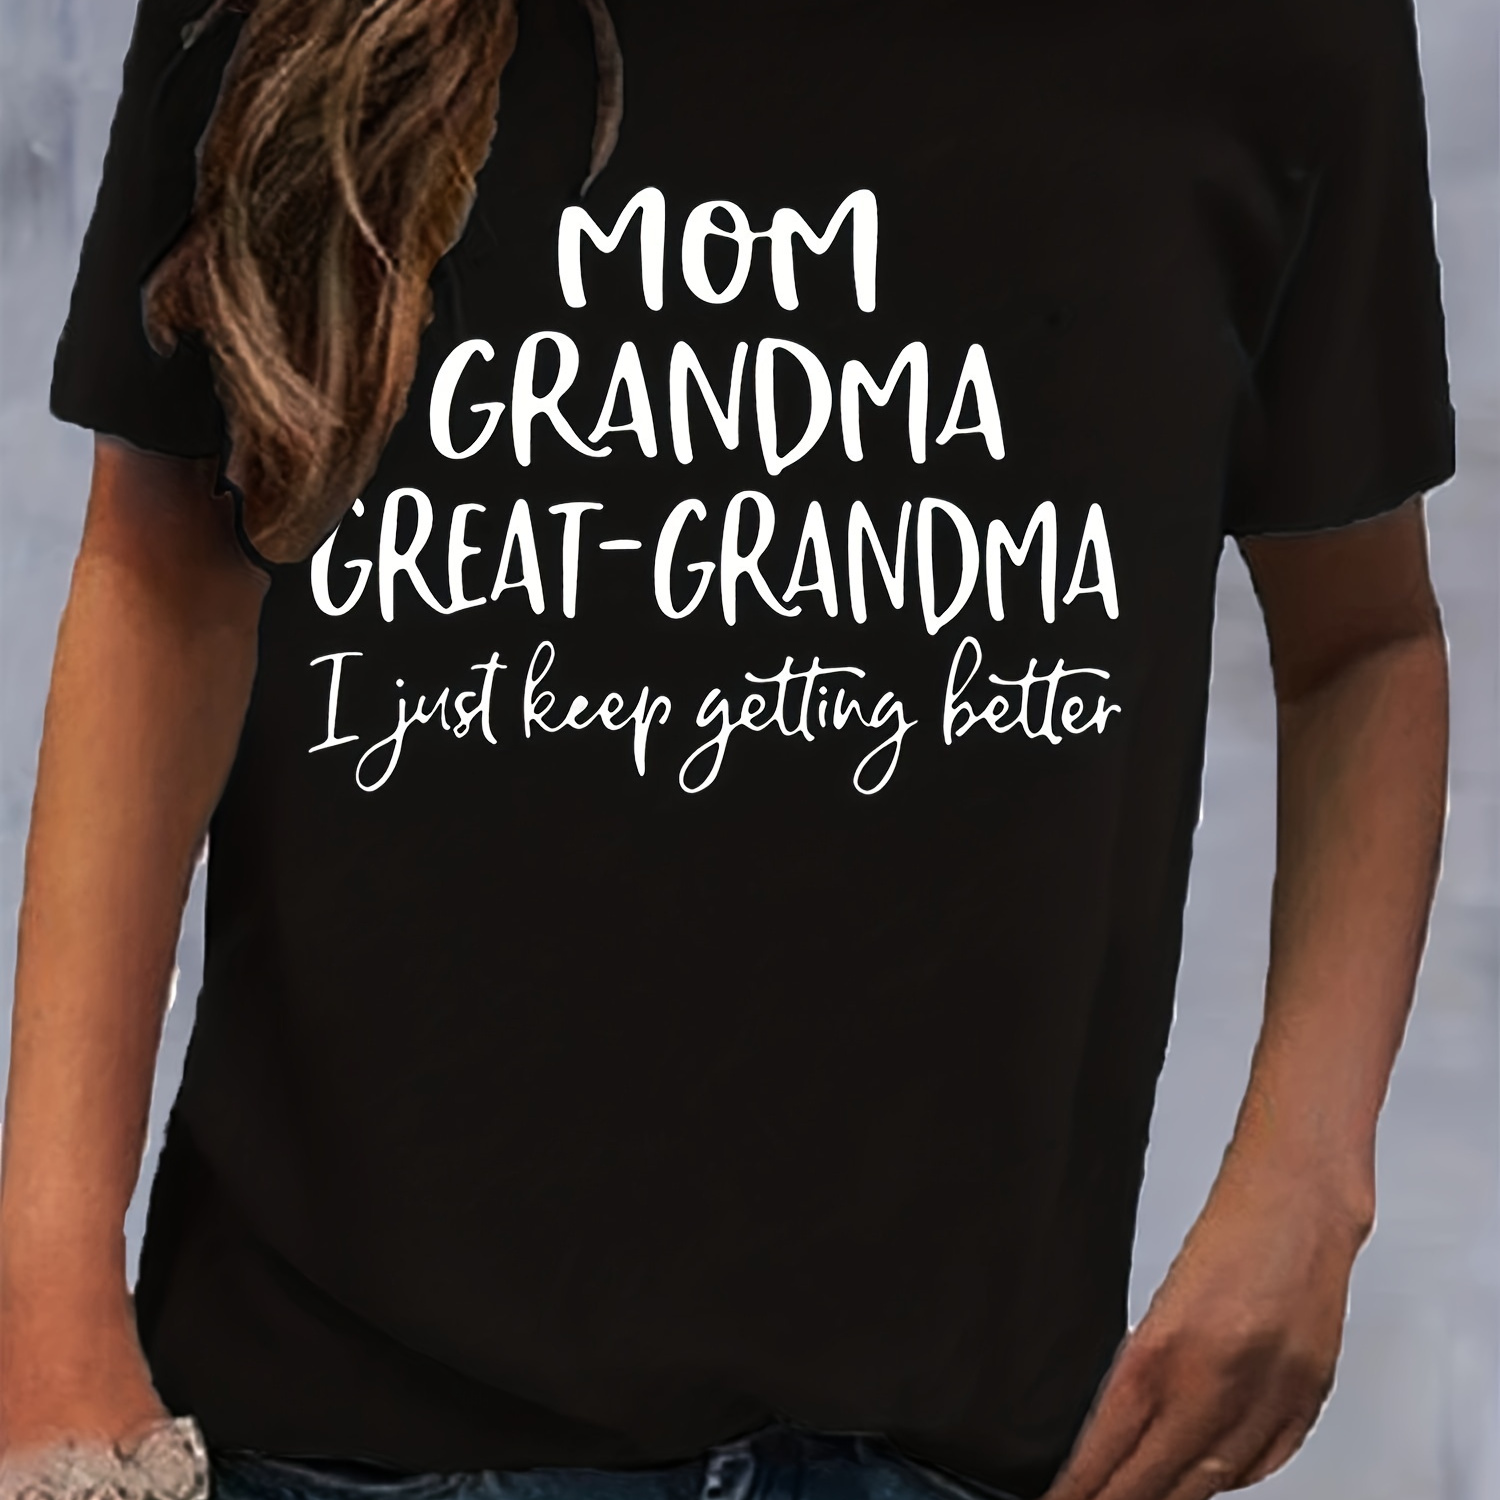 

Mom & Grandma Letter Print T-shirt, Short Sleeve Crew Neck Casual Top For Spring & Summer, Women's Clothing